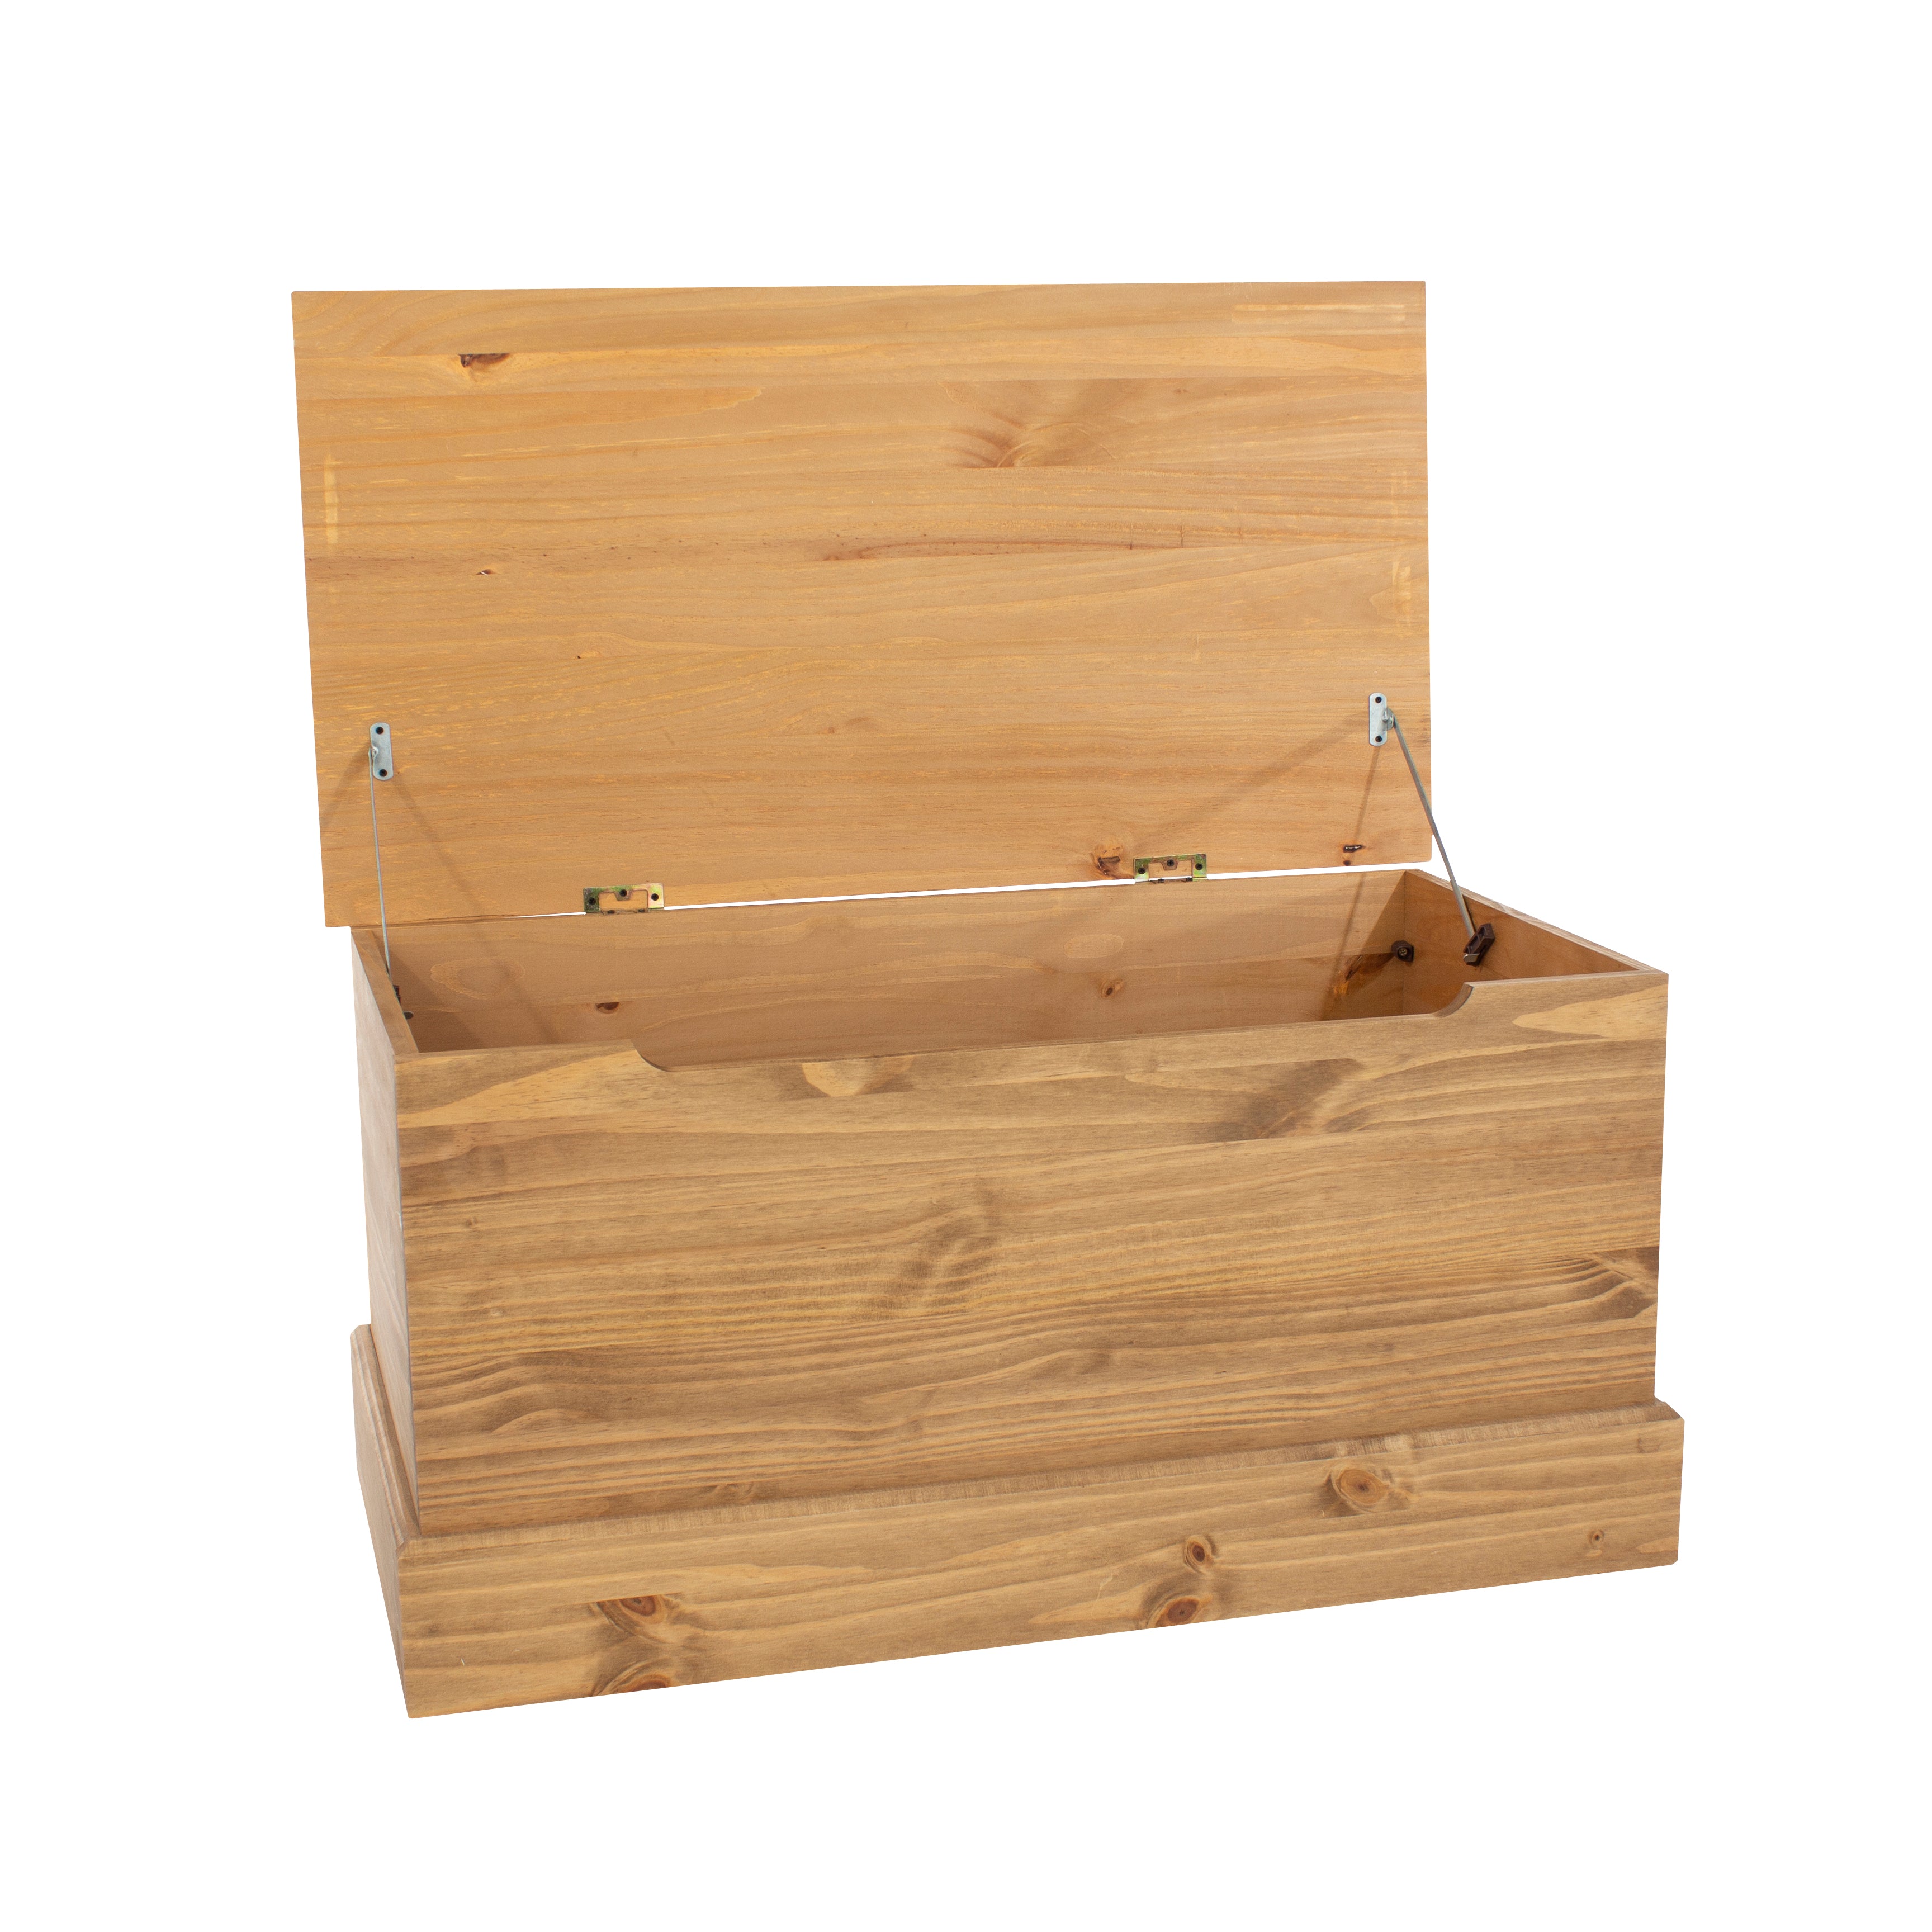 Ottoman Storage Box  / Bench / Trunk